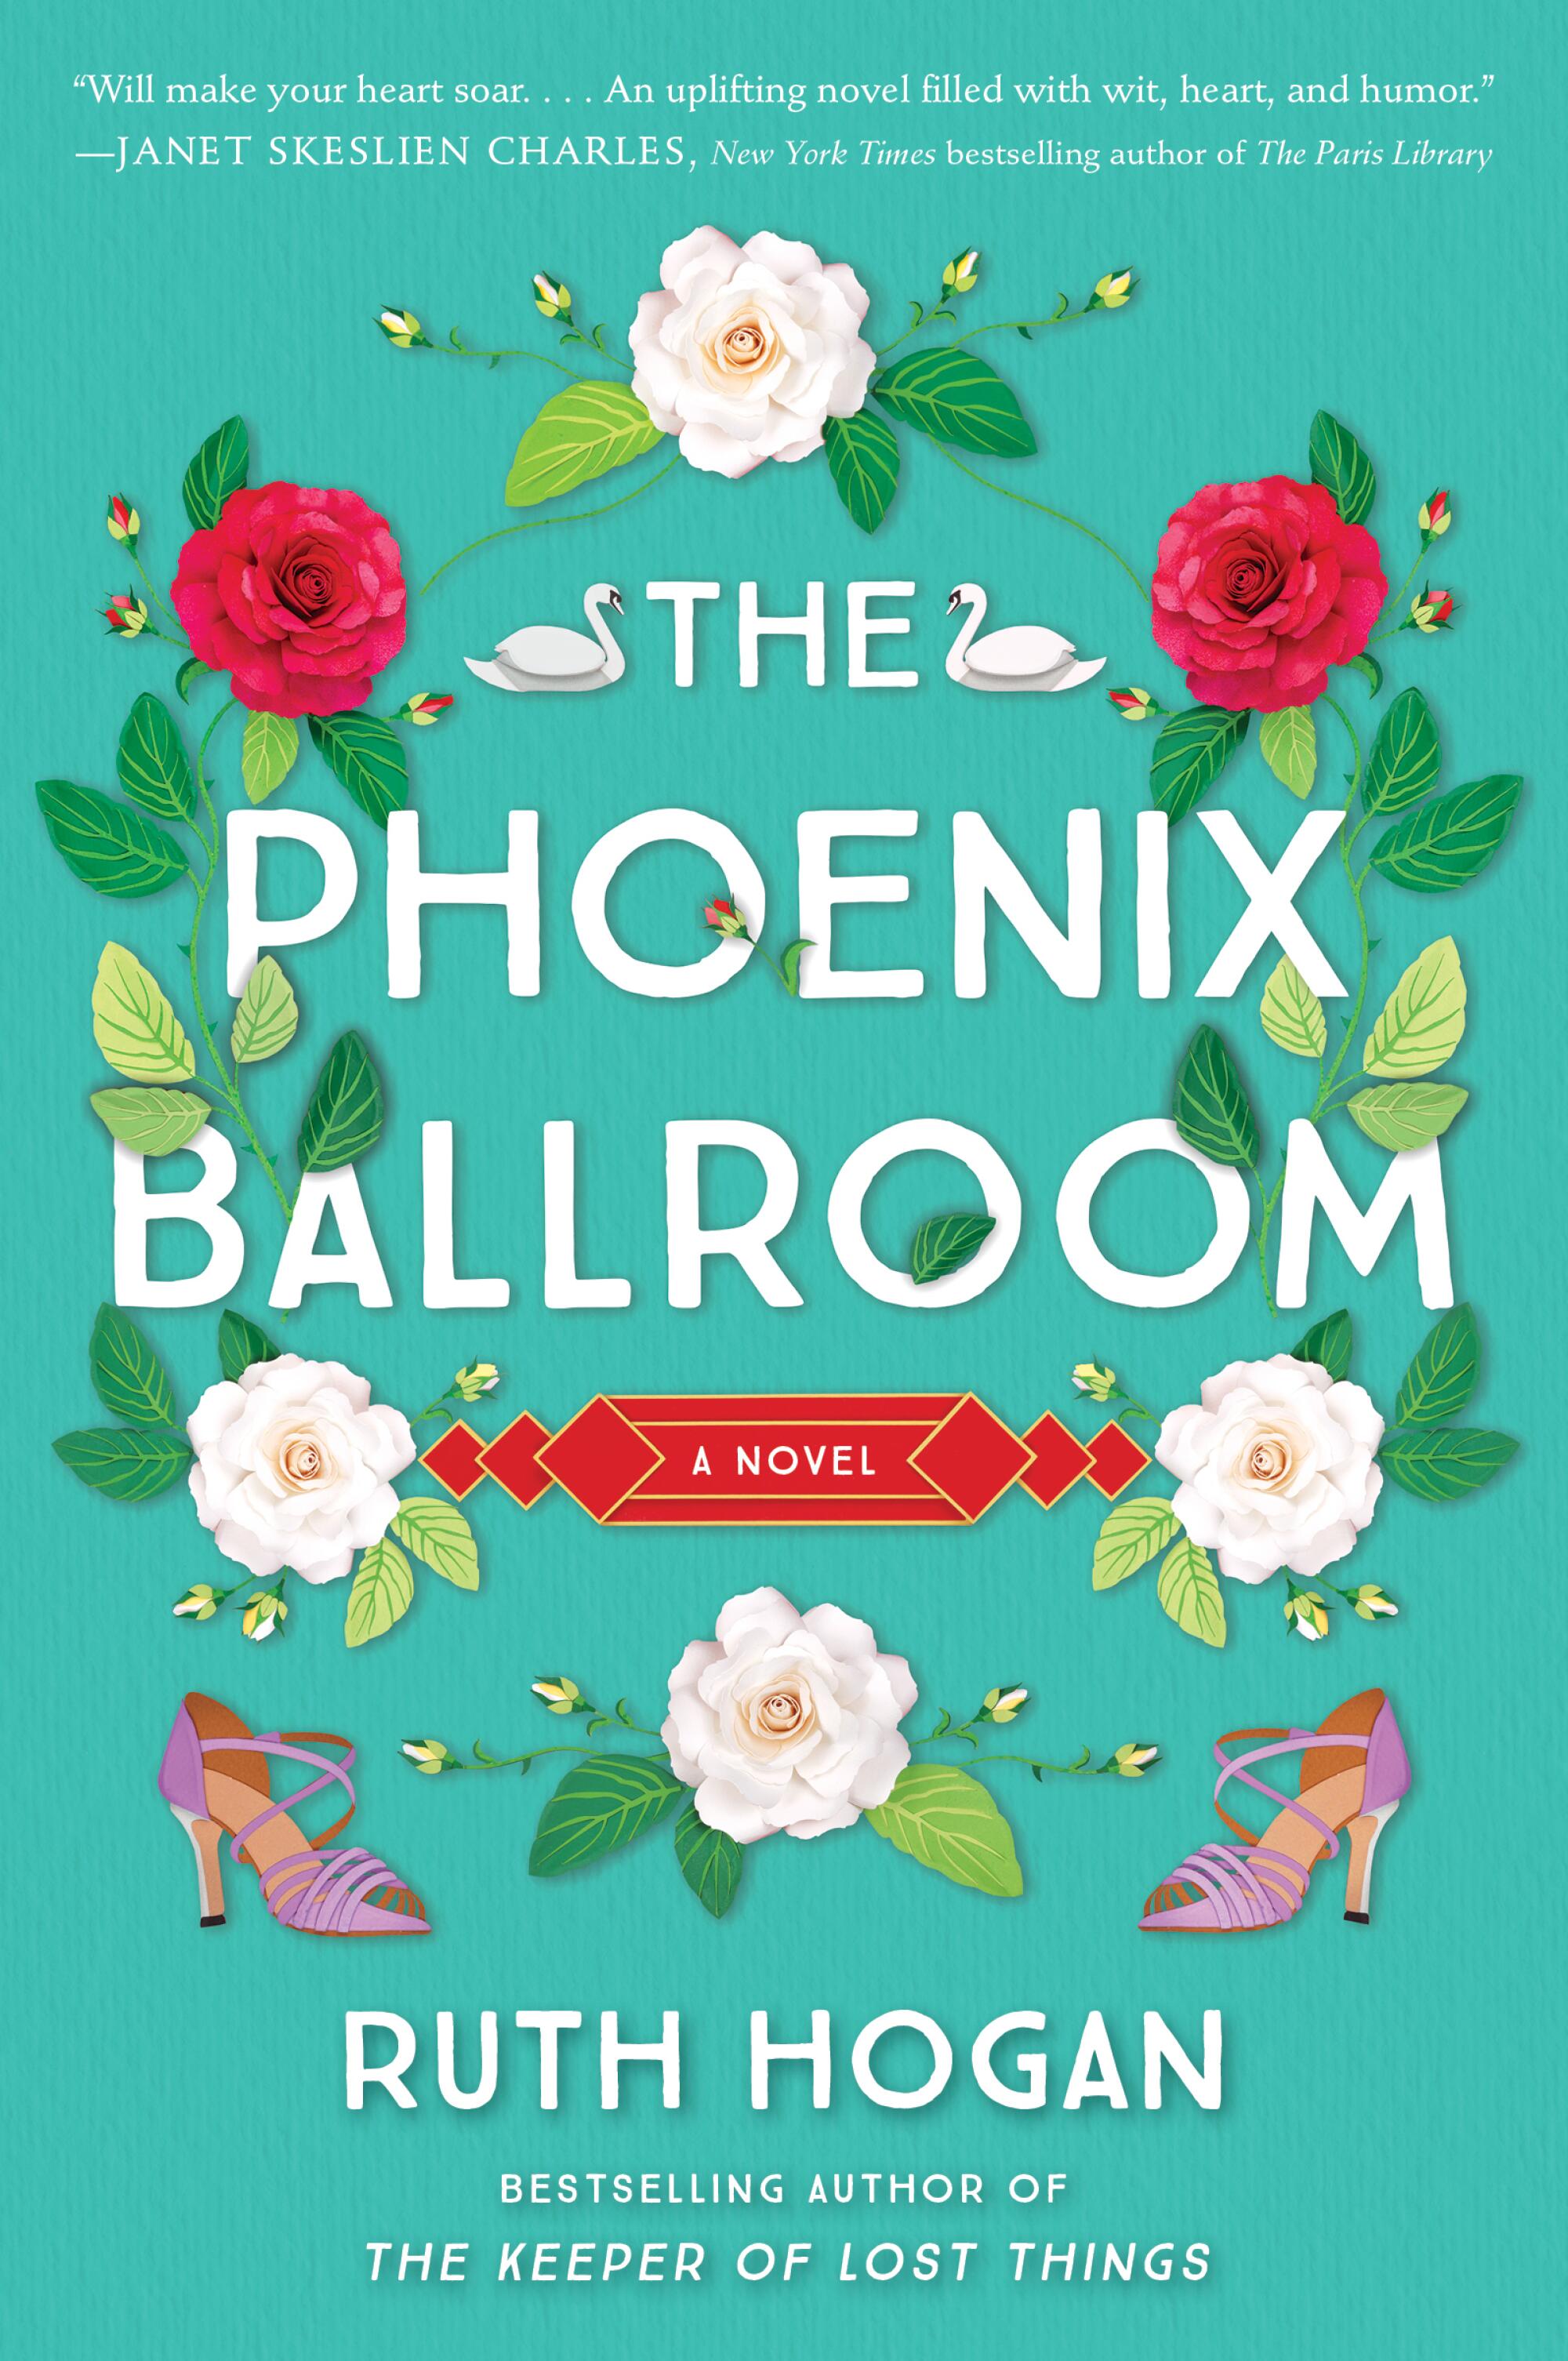 "The Phoenix Ballroom" by Ruth Hogan